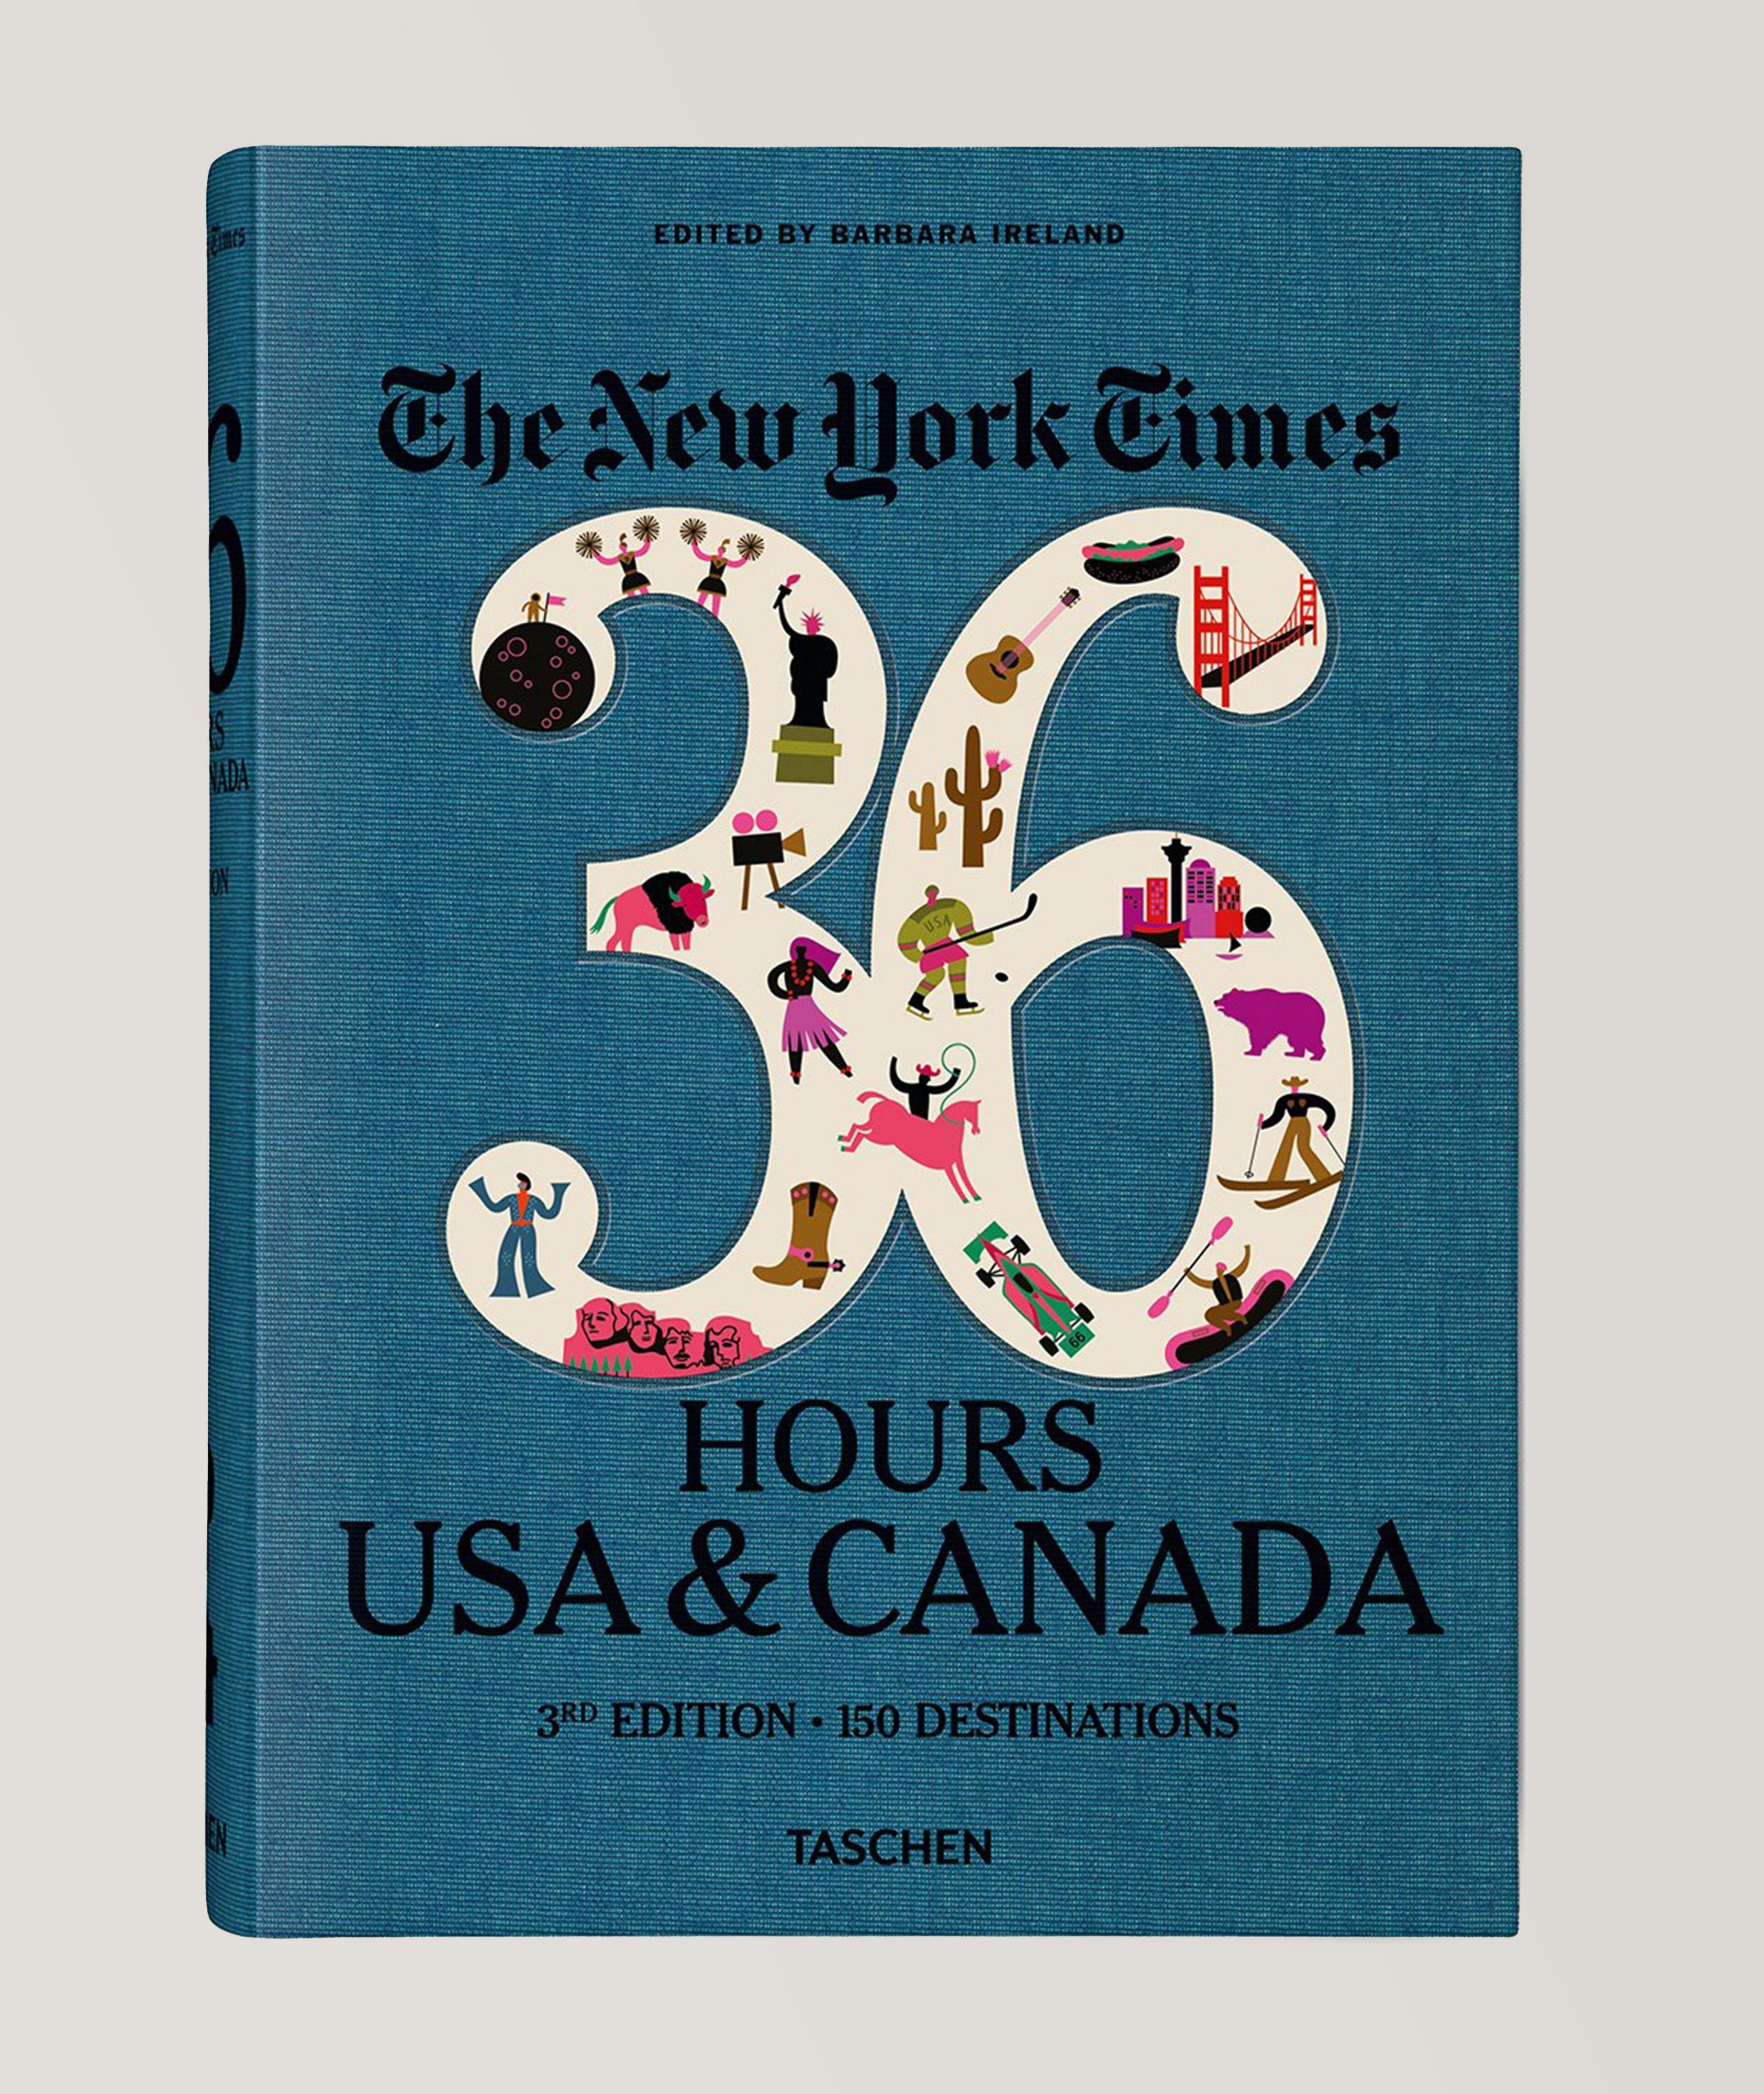 Livre « The New York Times : 36 Hours USA & Canada », troisième édition image 0